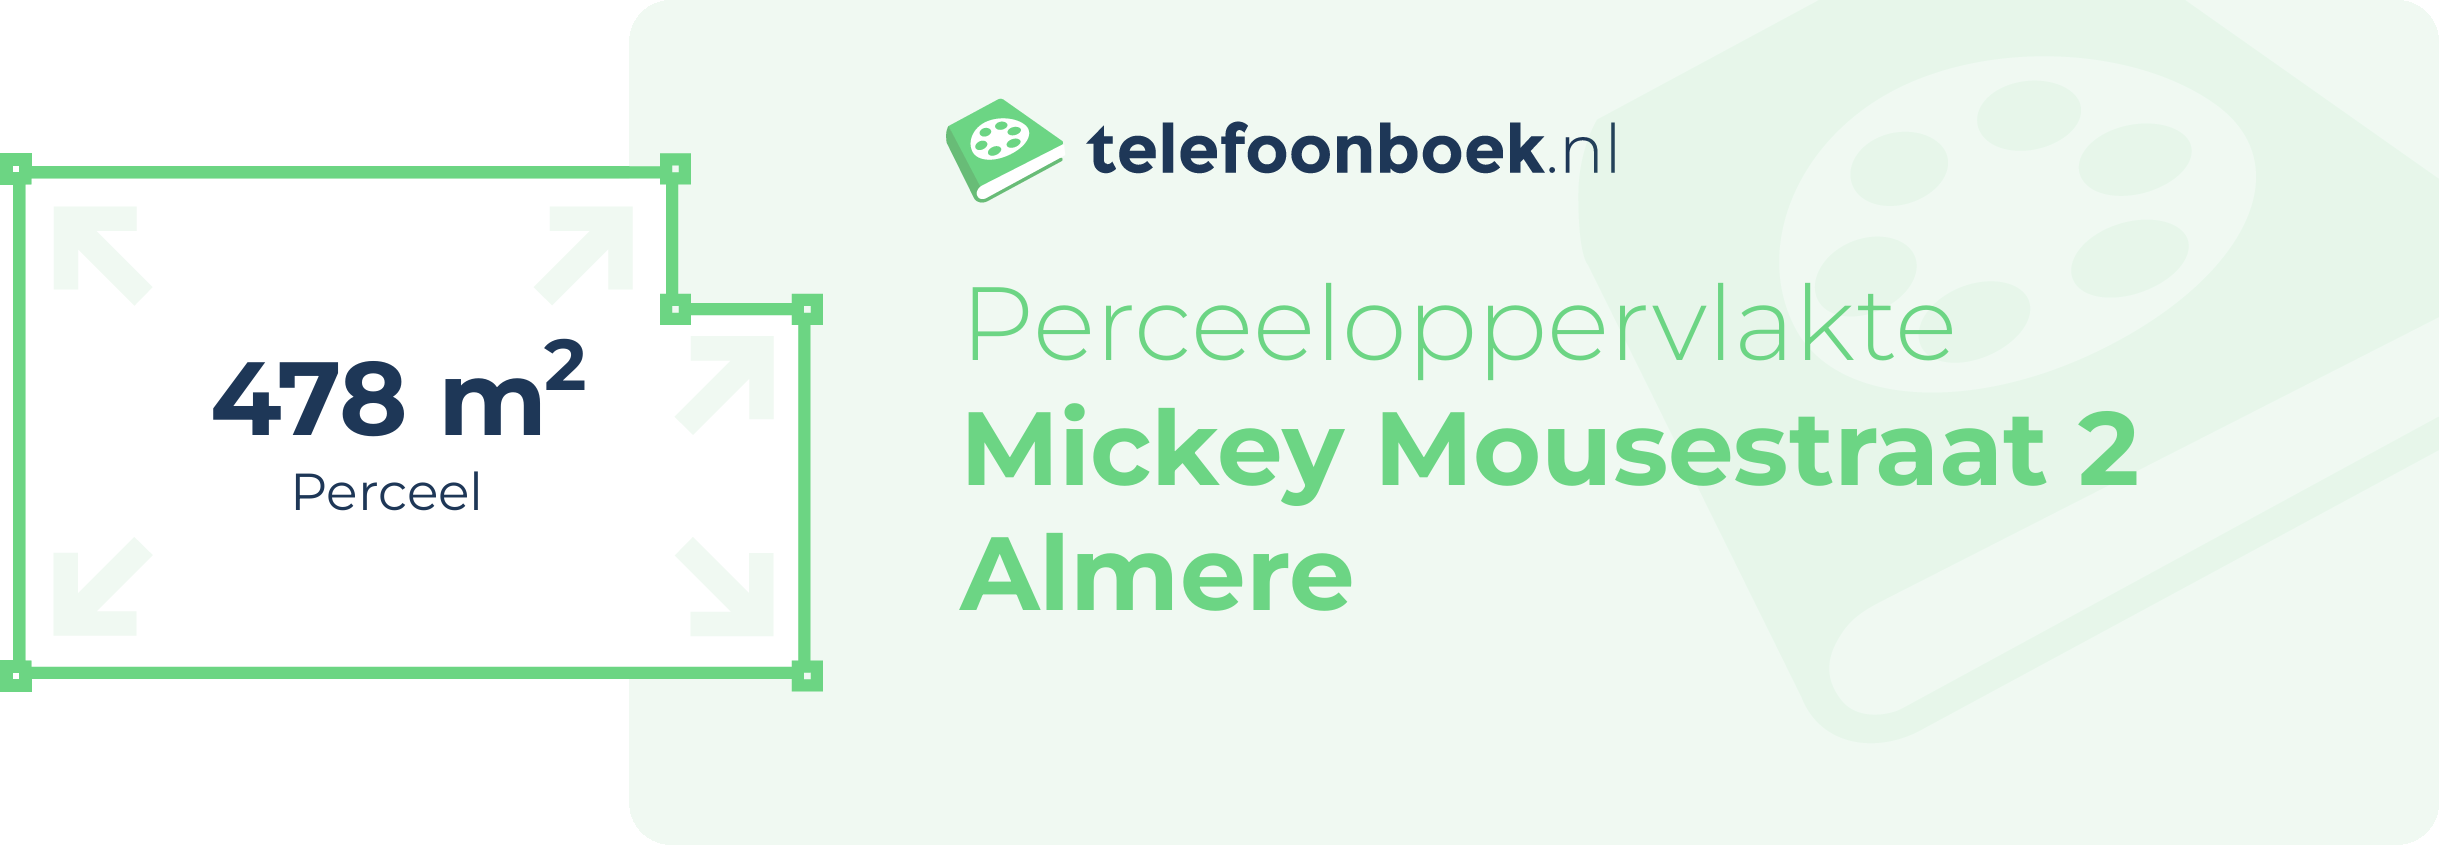 Perceeloppervlakte Mickey Mousestraat 2 Almere